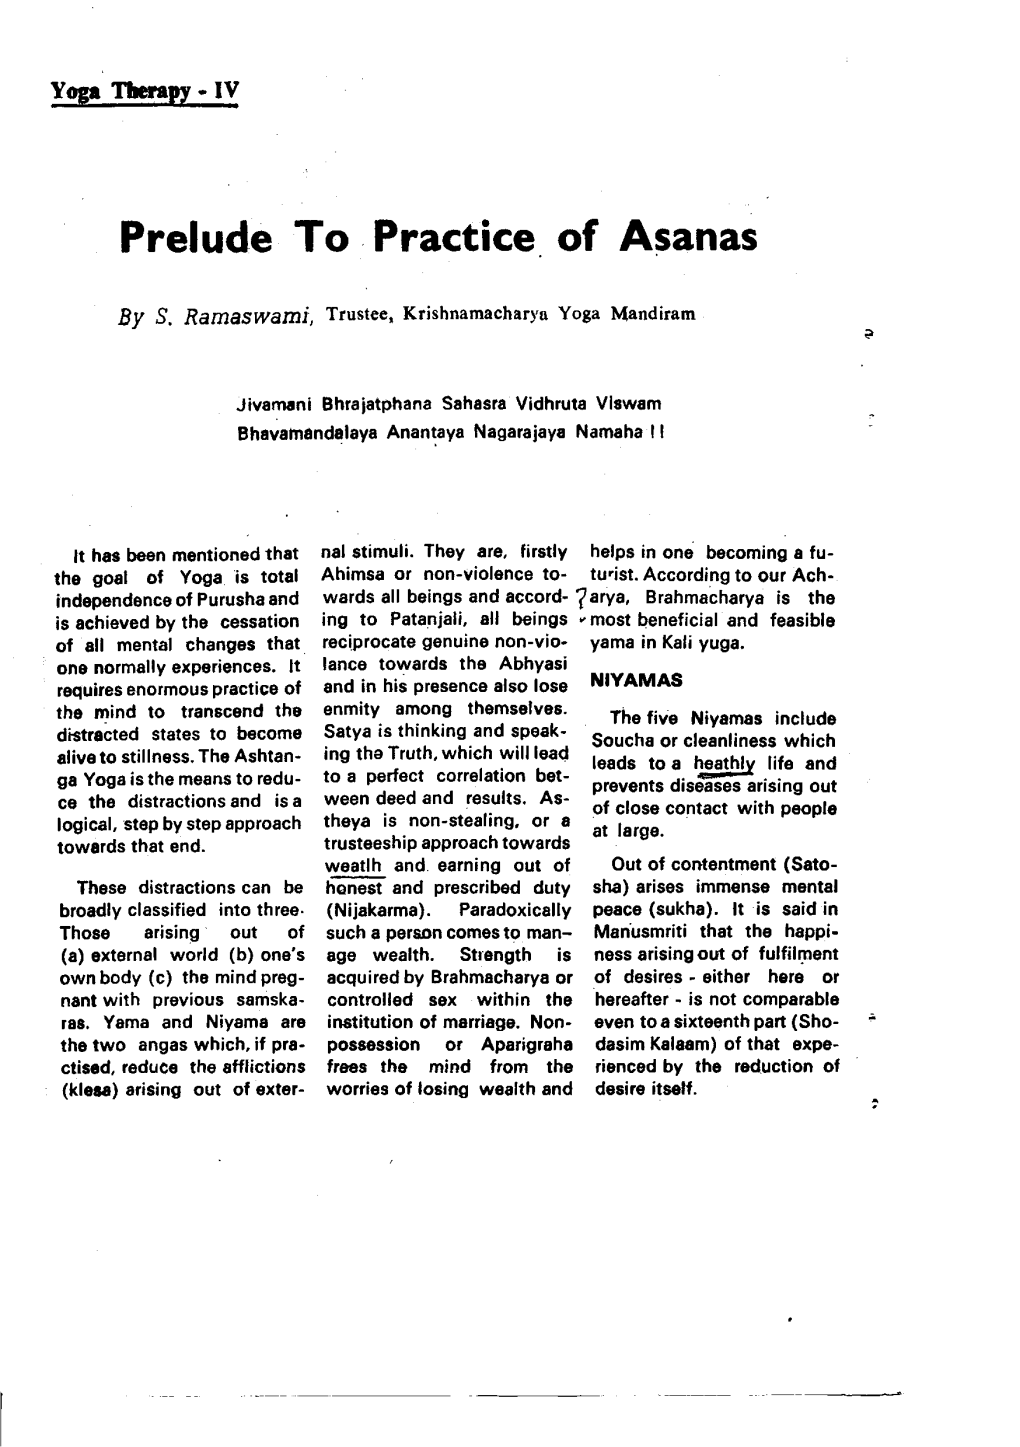 Prelude to Practice of Asanas